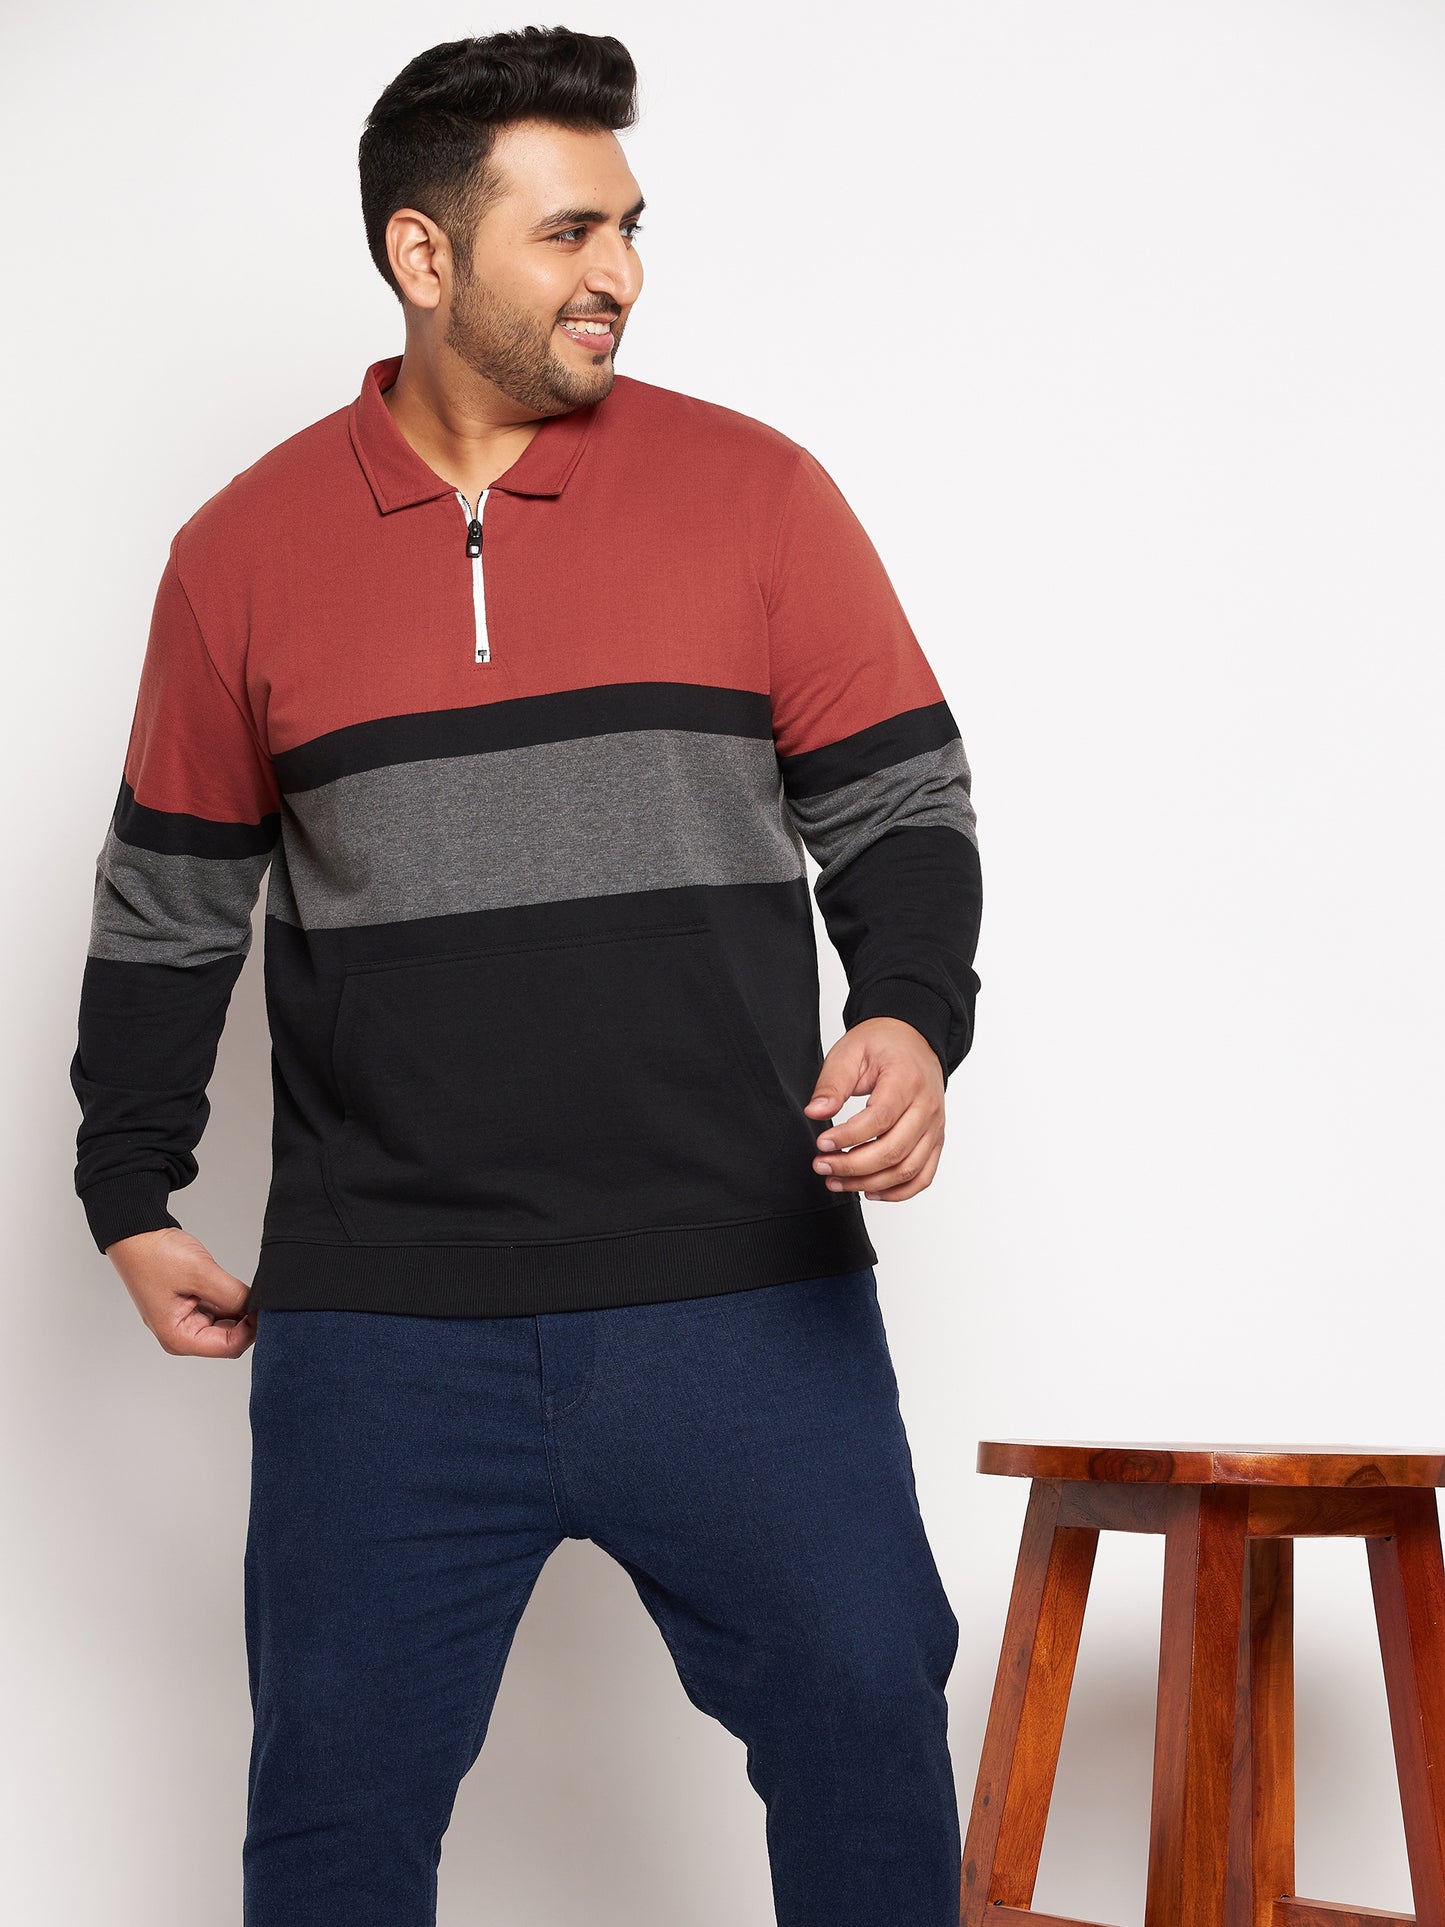 Austivo Men's Colour Block Sweatshirt